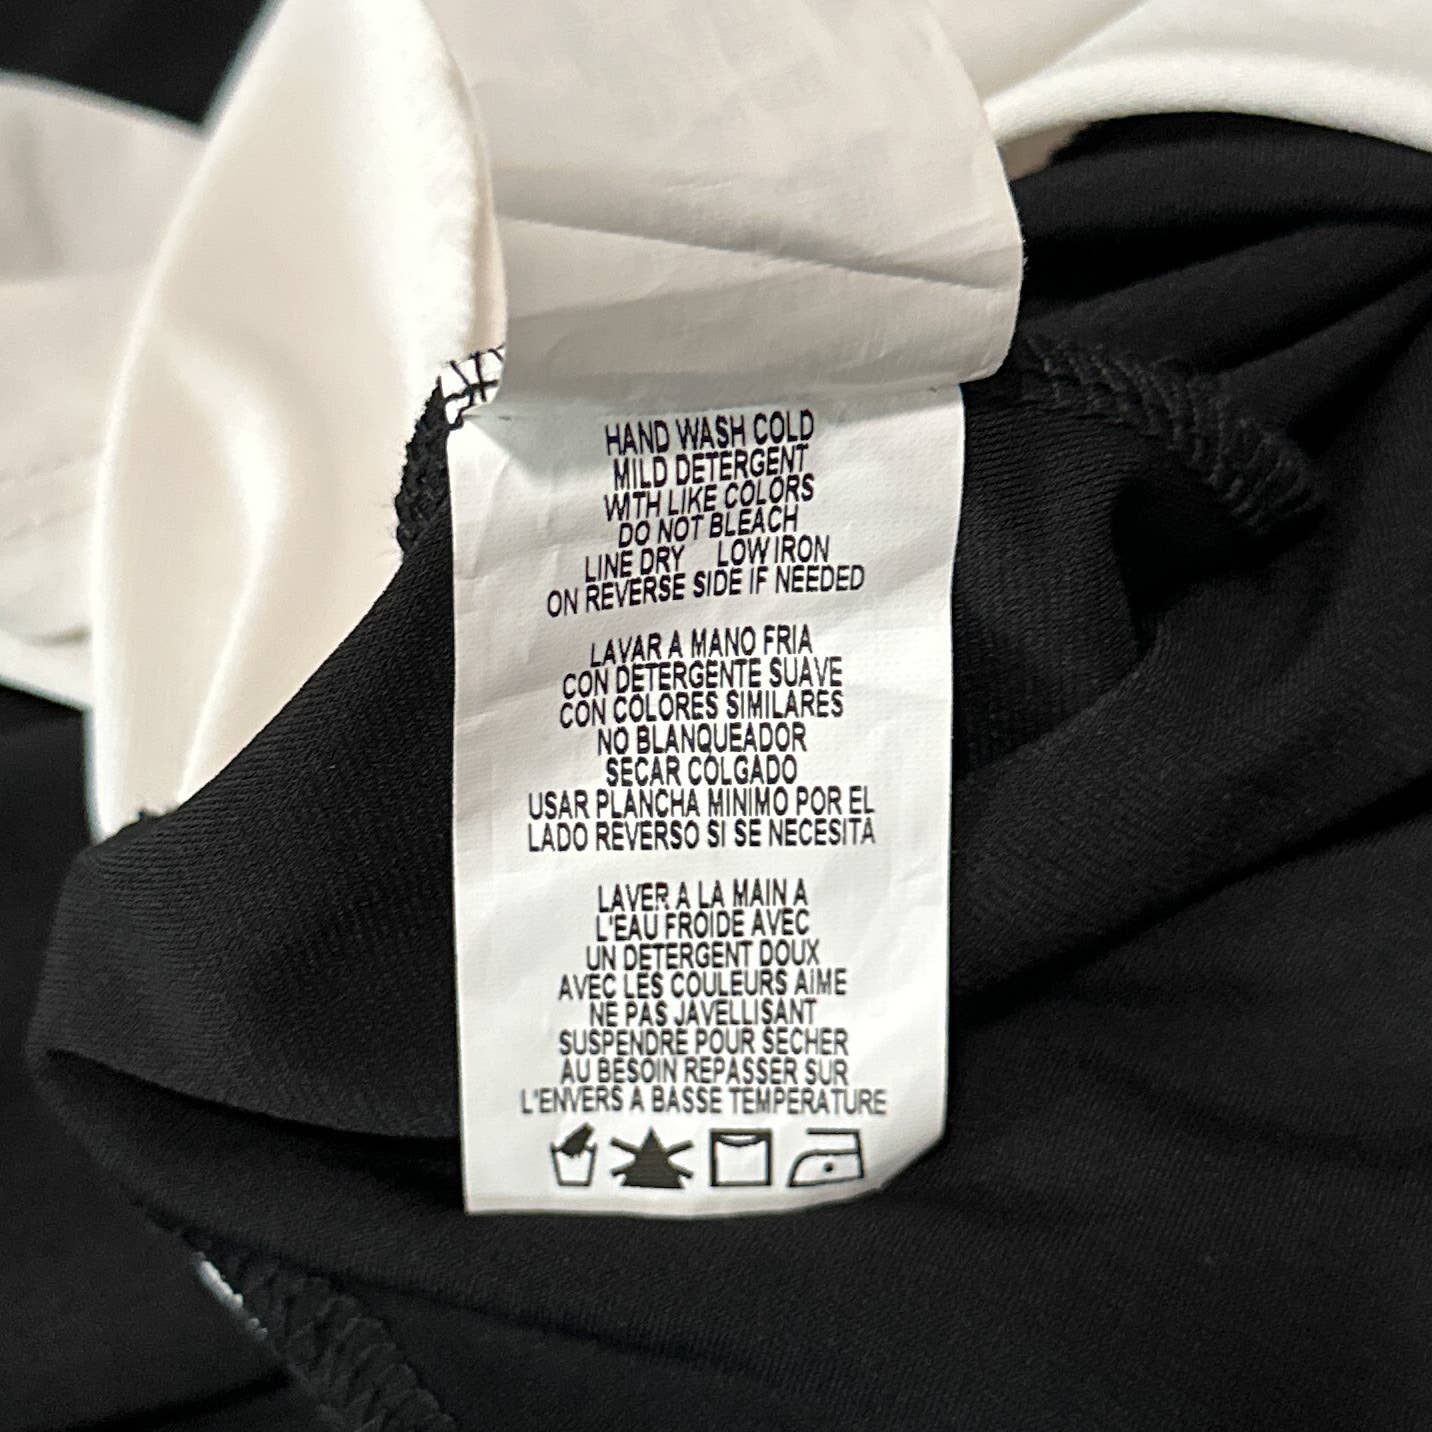 Tiana B. | Colorblock Black and White Short Sleeve Dress | Sz